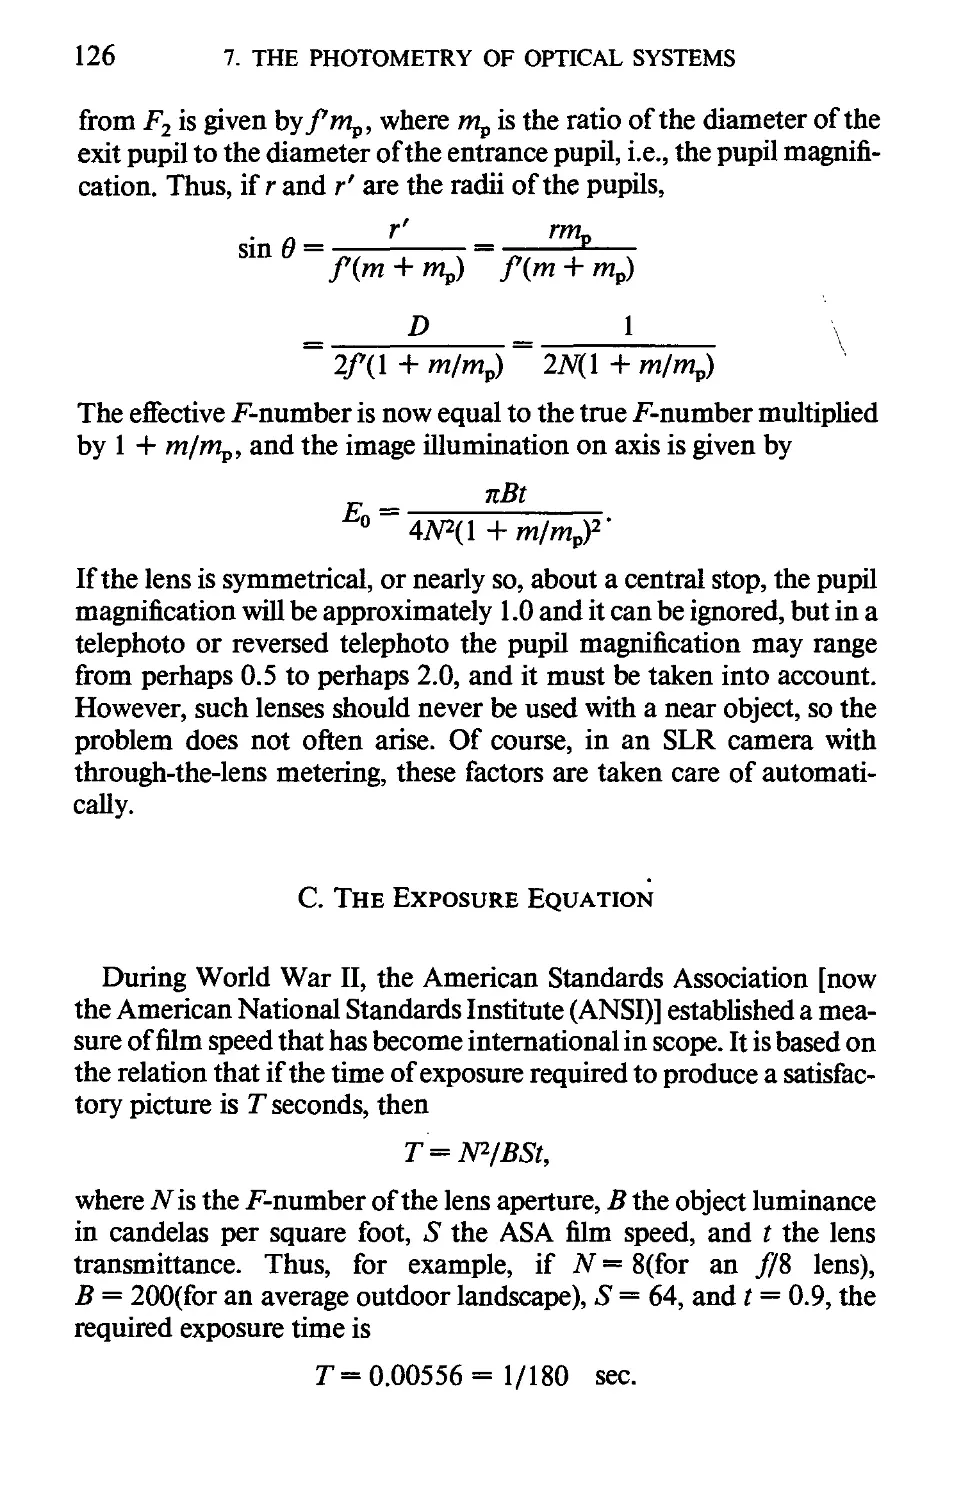 С. The Exposure Equation